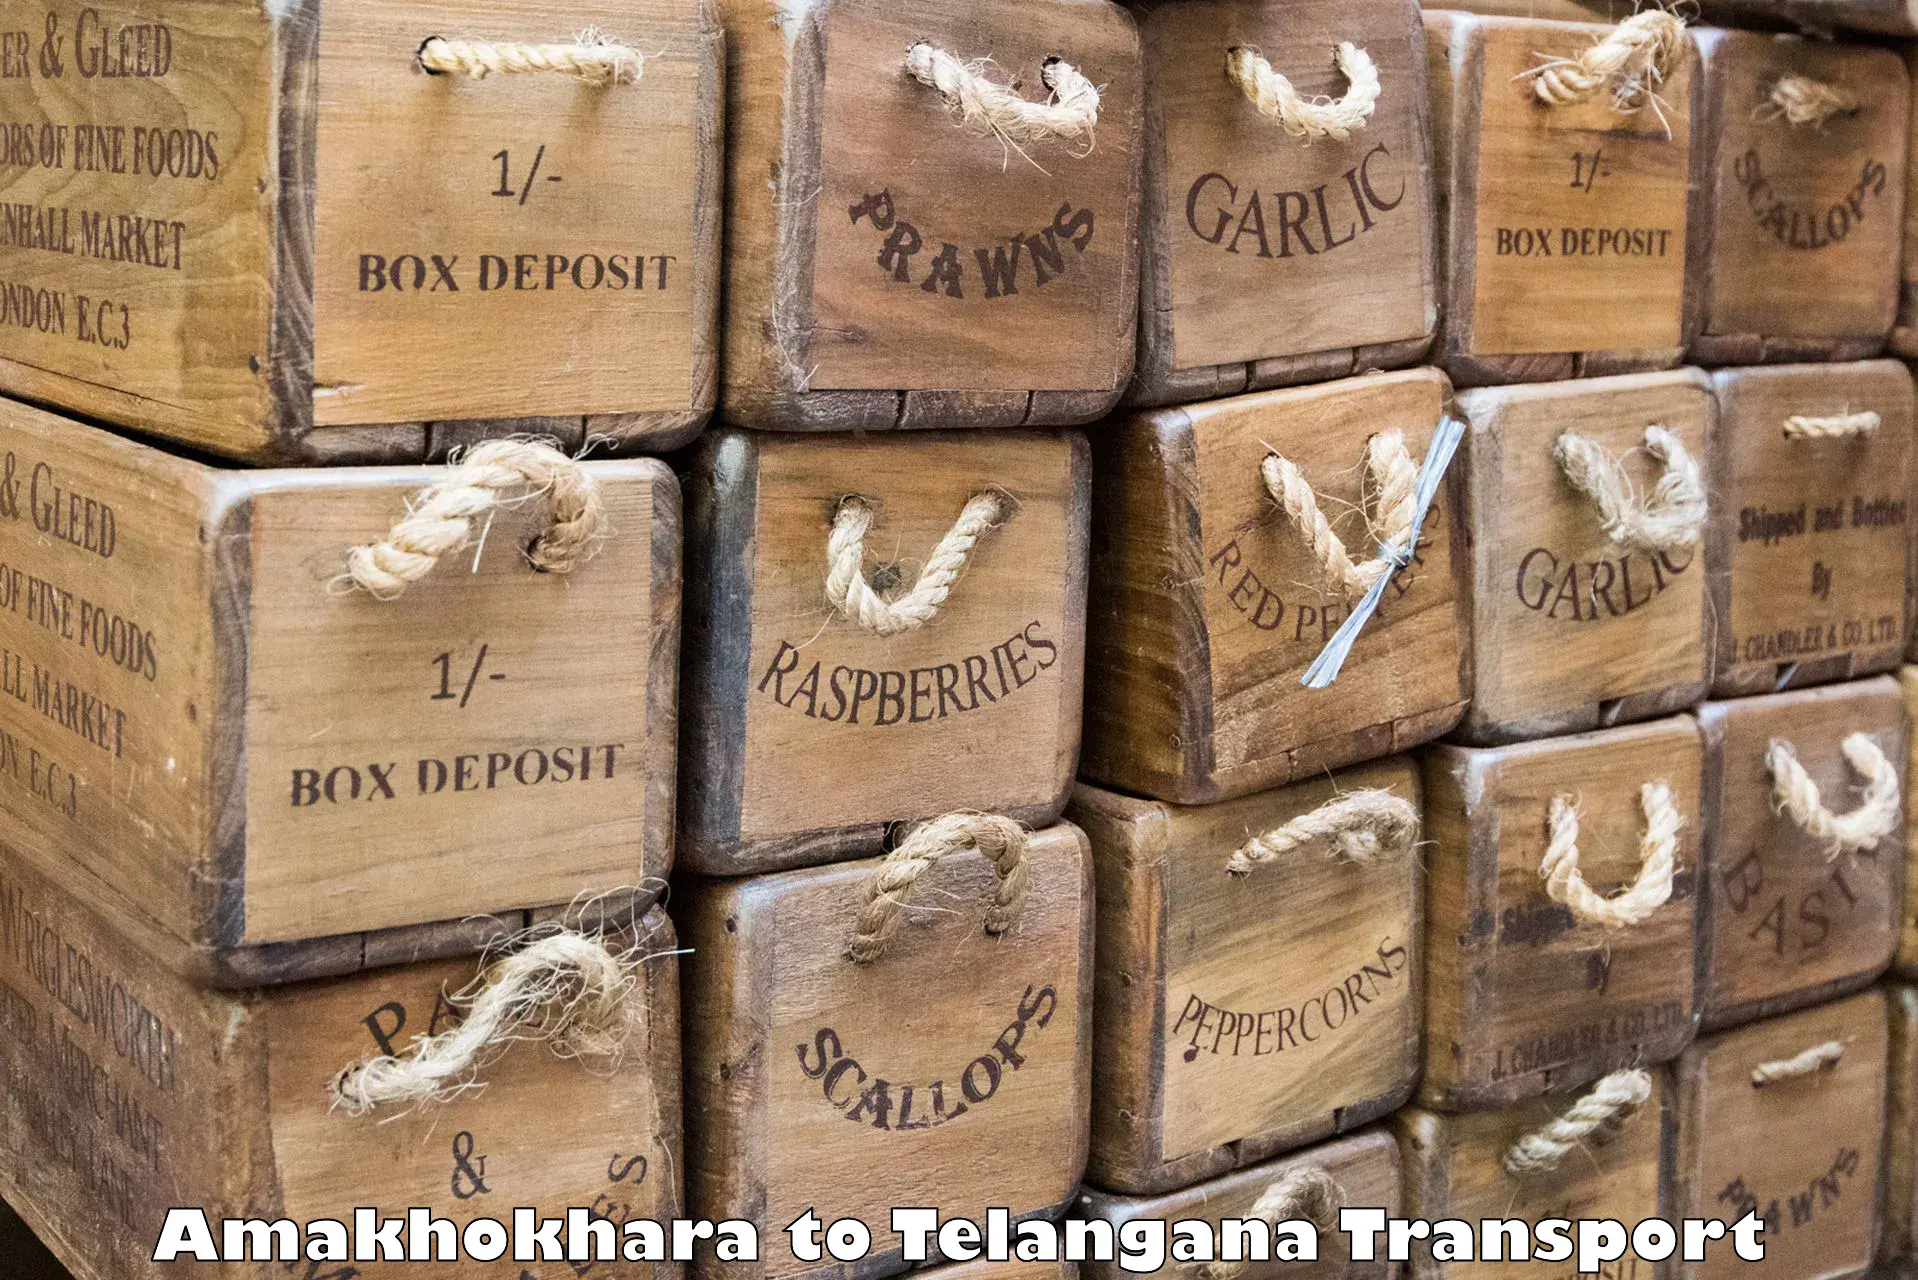 Express transport services Amakhokhara to Bijinapalle